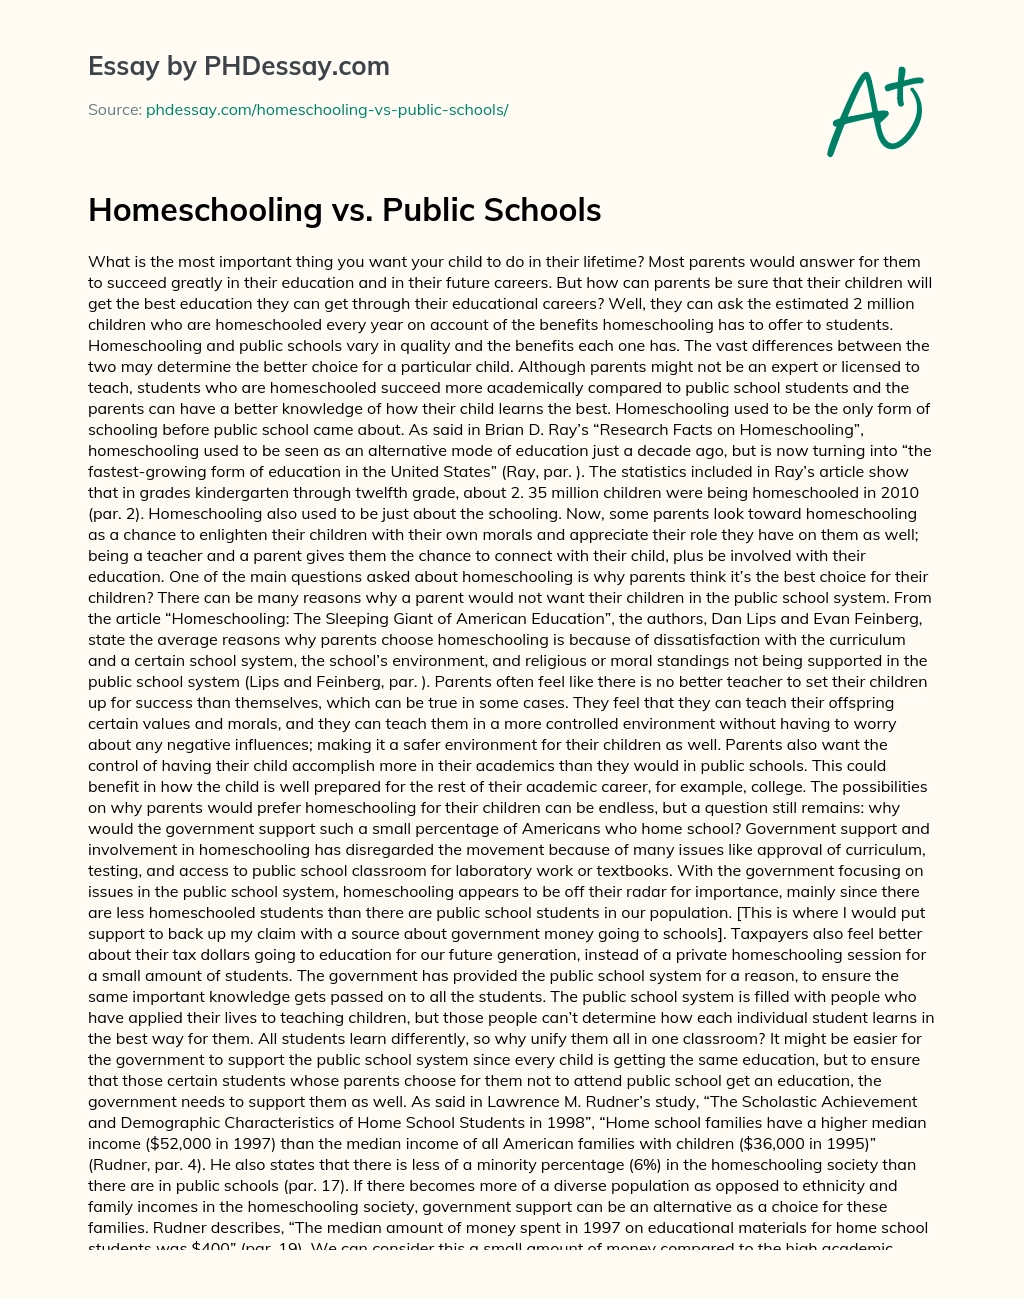 homeschooling or public school essay